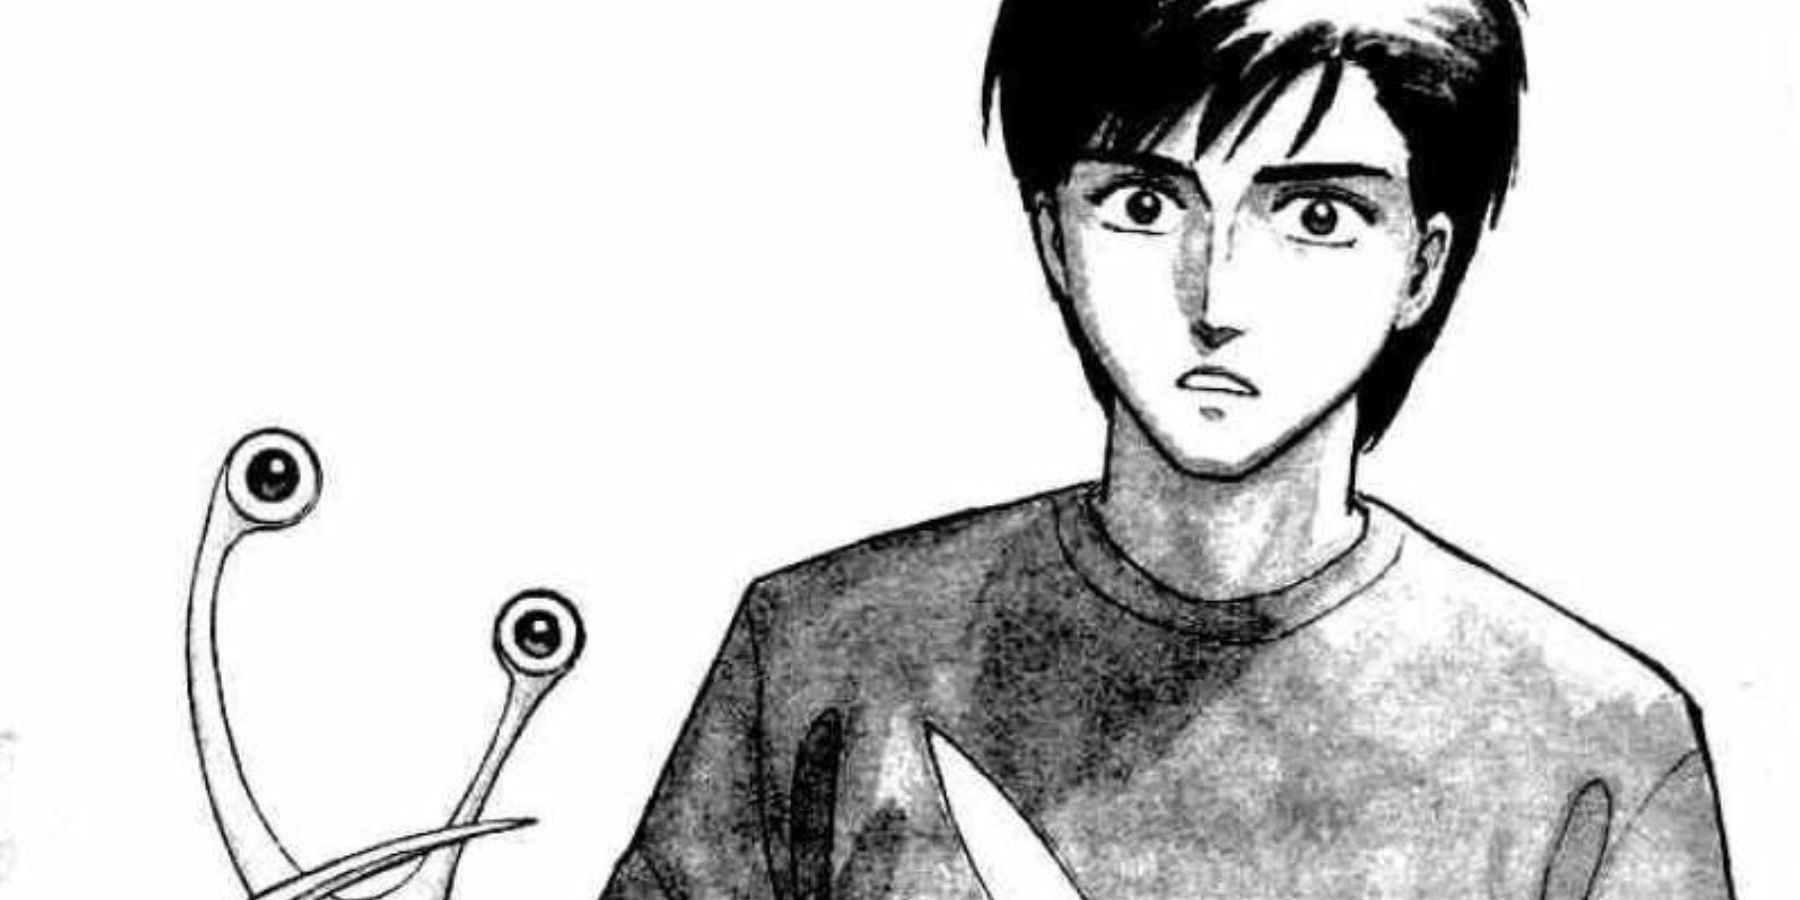 Shinichi Izumi in the Parasyte manga alien right hand